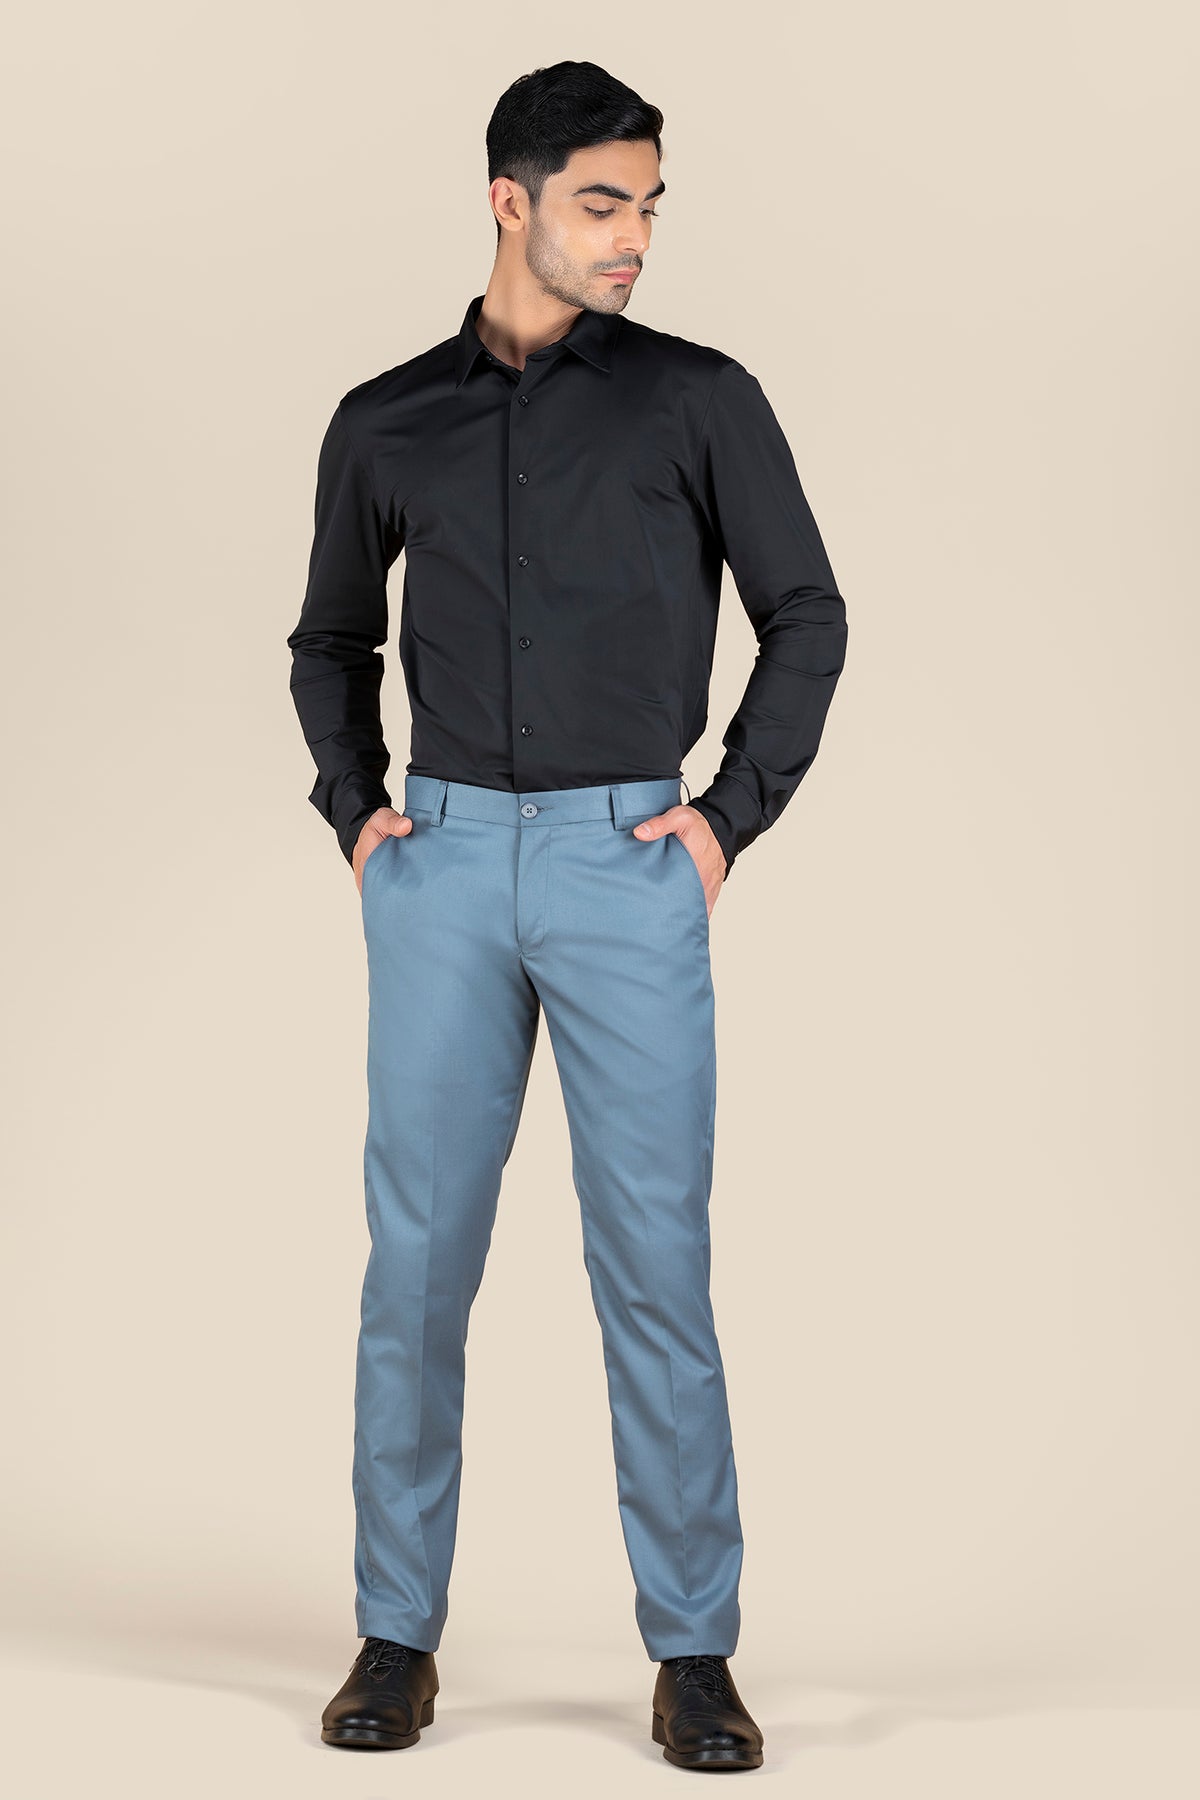 Buy Steel Grey Trousers & Pants for Men by DENNISLINGO PREMIUM ATTIRE  Online